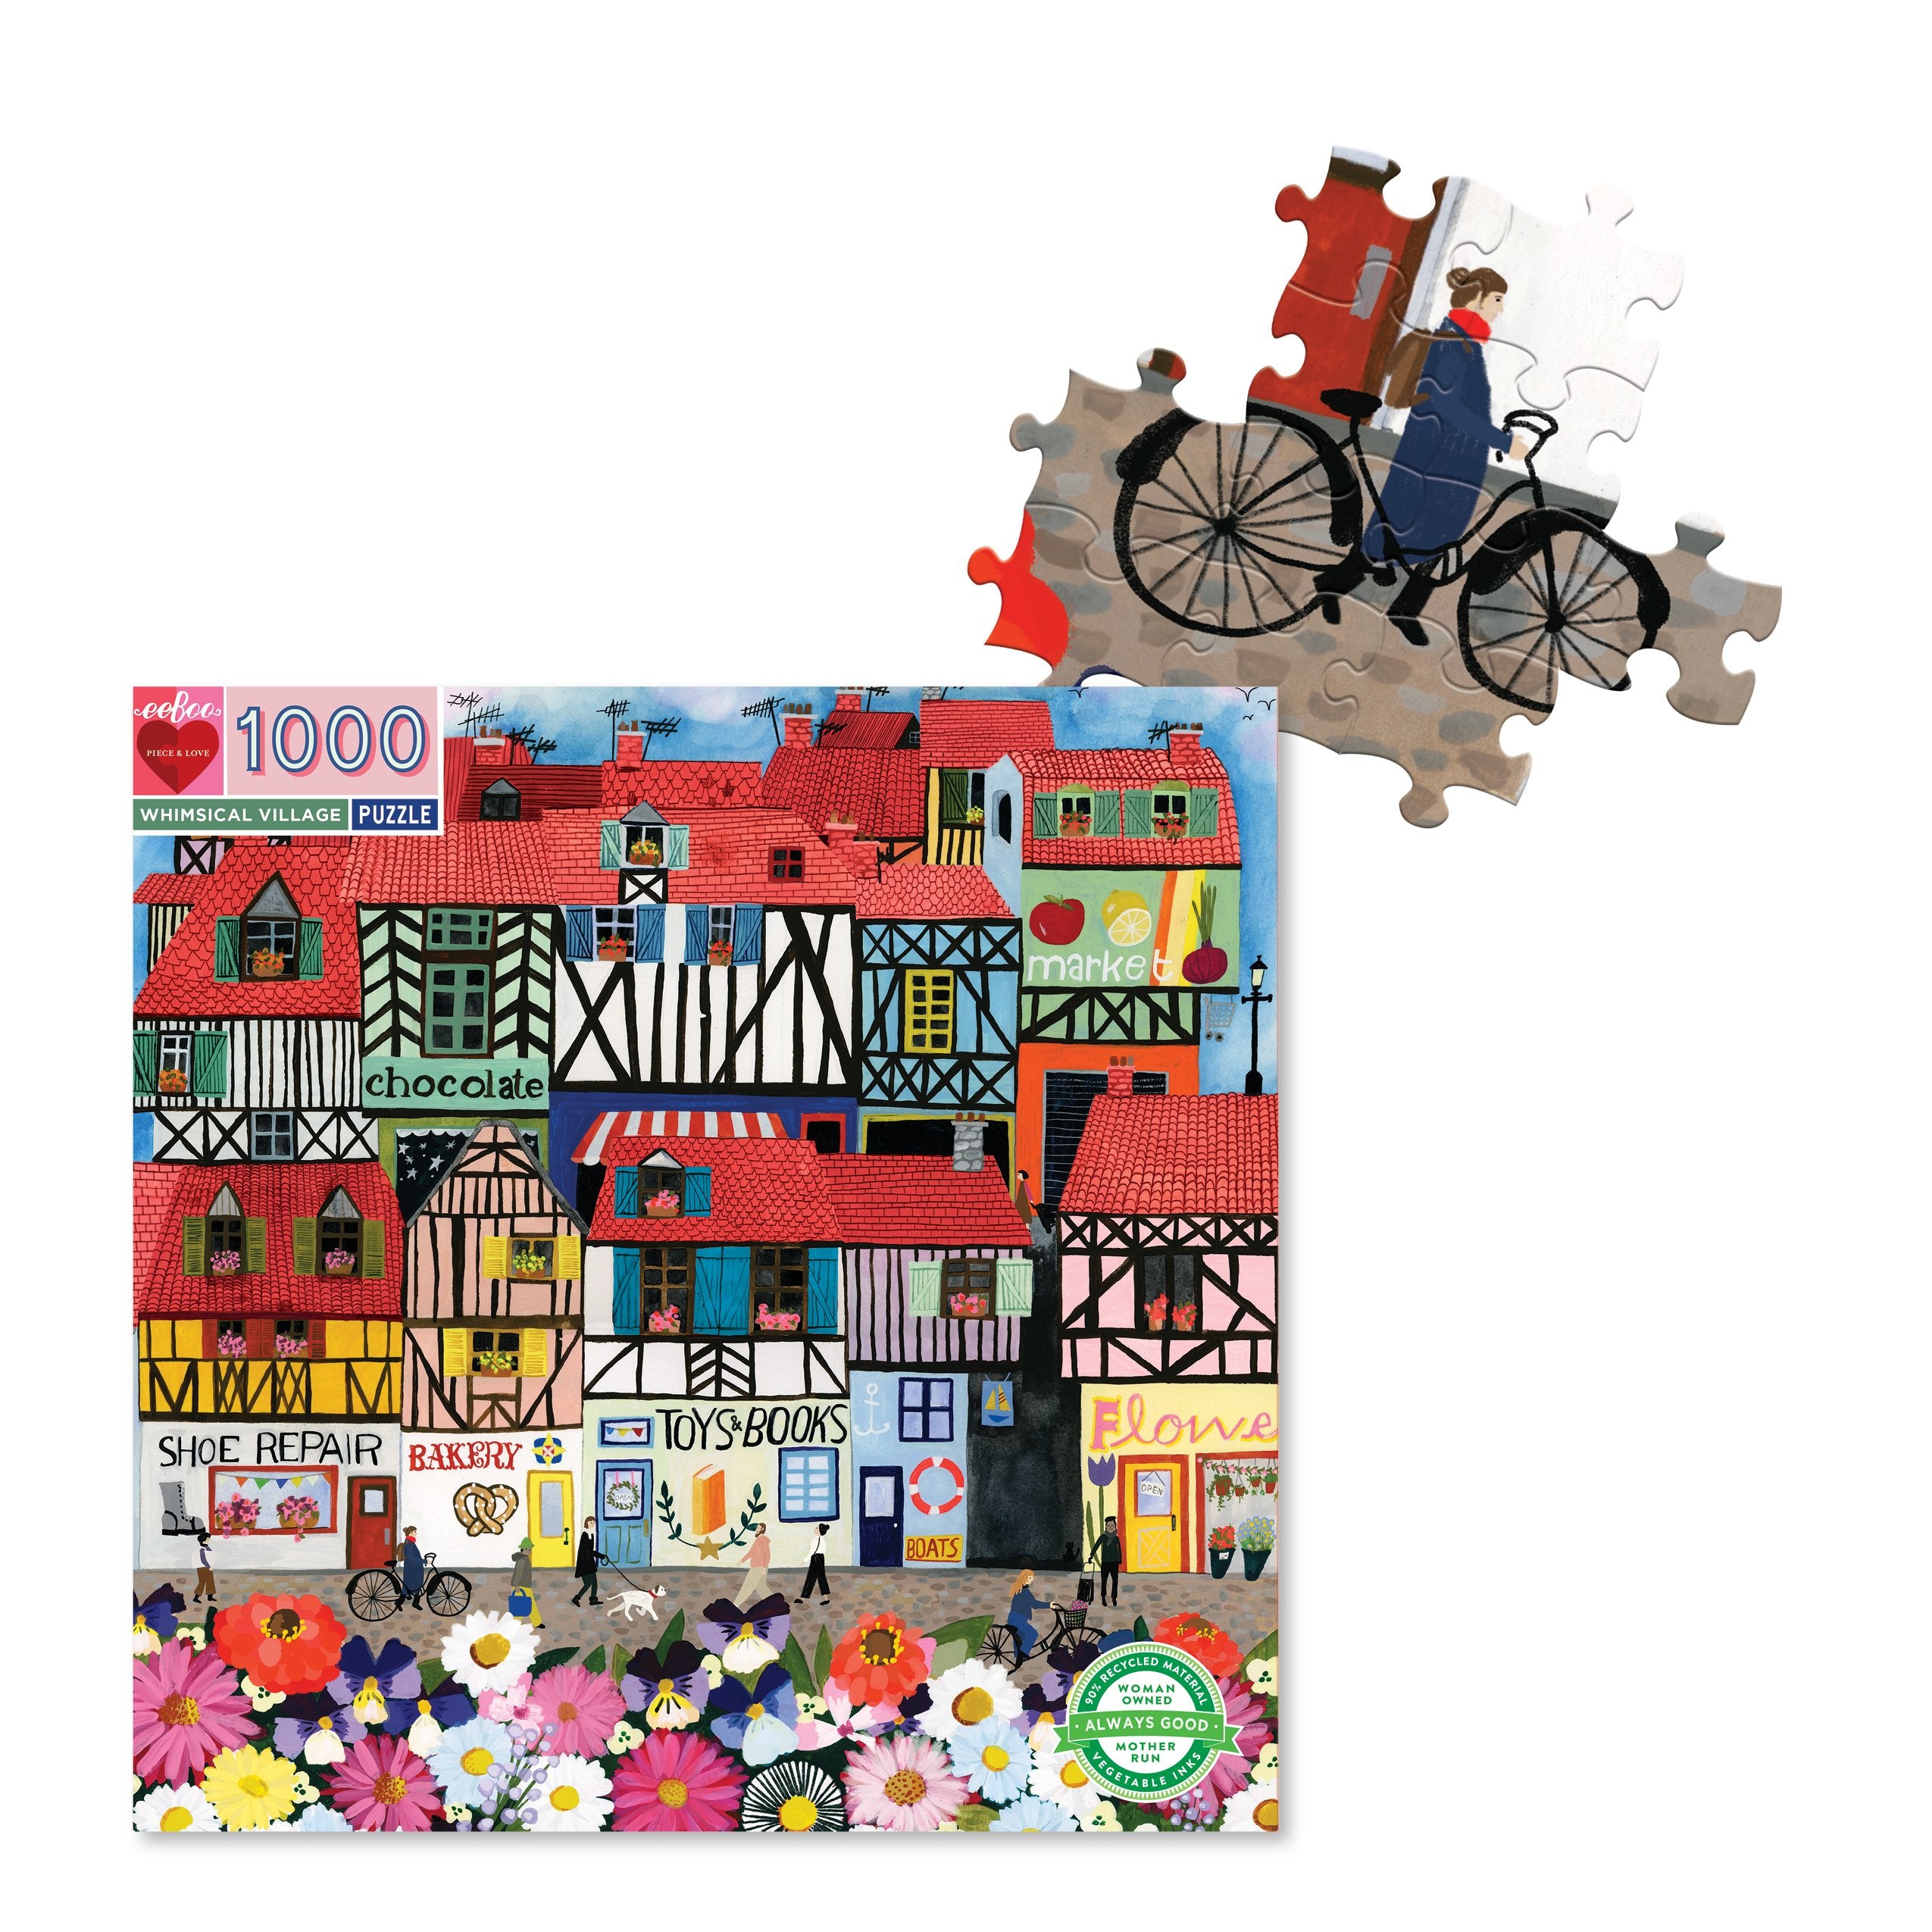 Whimsical Village 1000 Piece Puzzle    